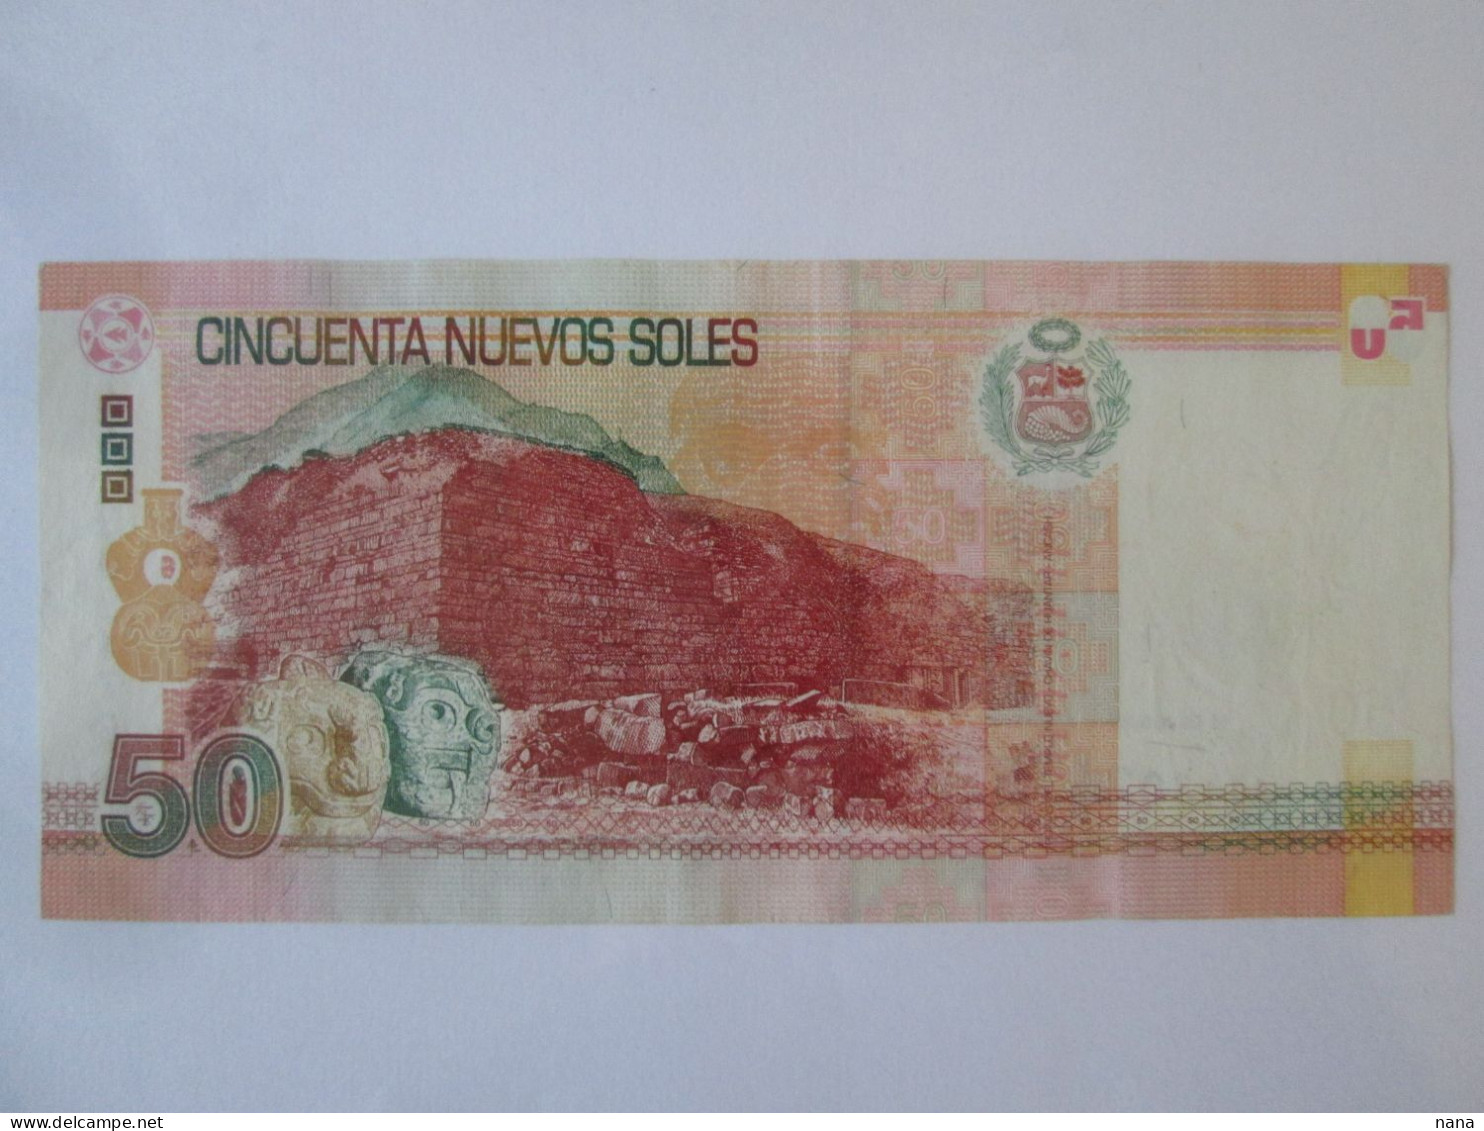 Rare Year! Peru 50 Nuevos Soles 2009 AUNC Banknote See Pictures - Peru